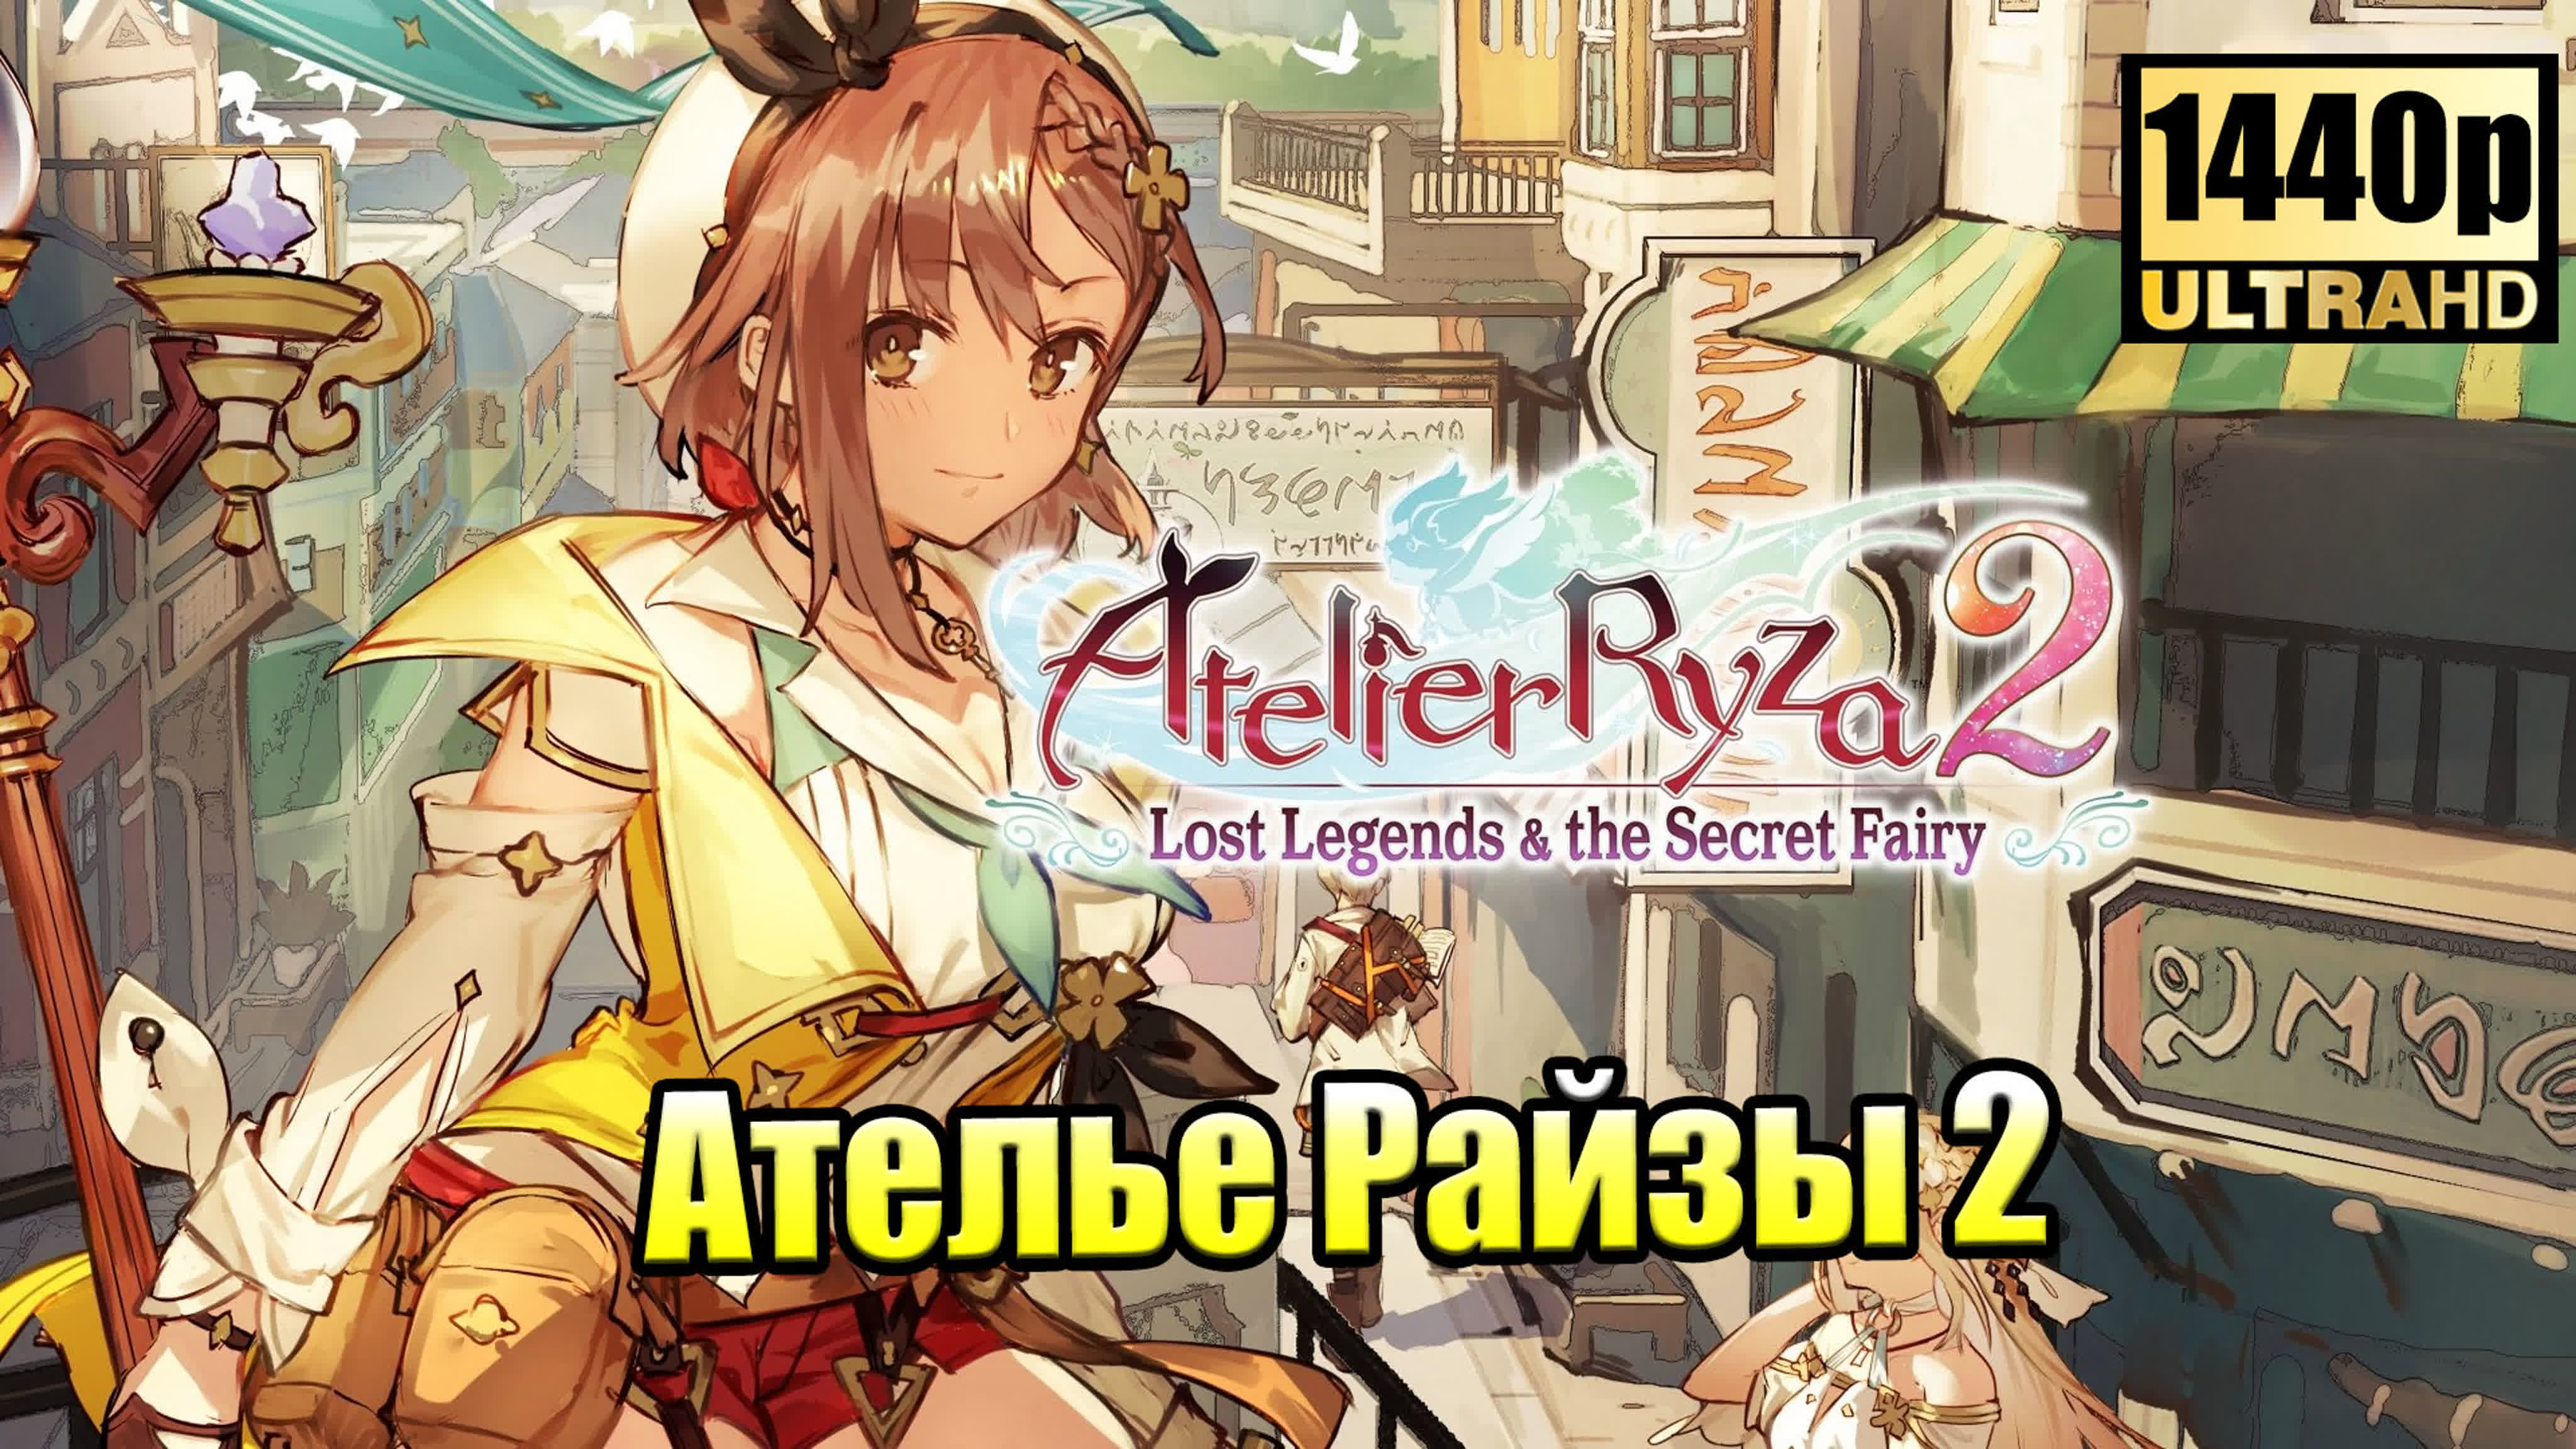 Atelier Ryza 2 Lost Legends & the Secret Fairy (PC)